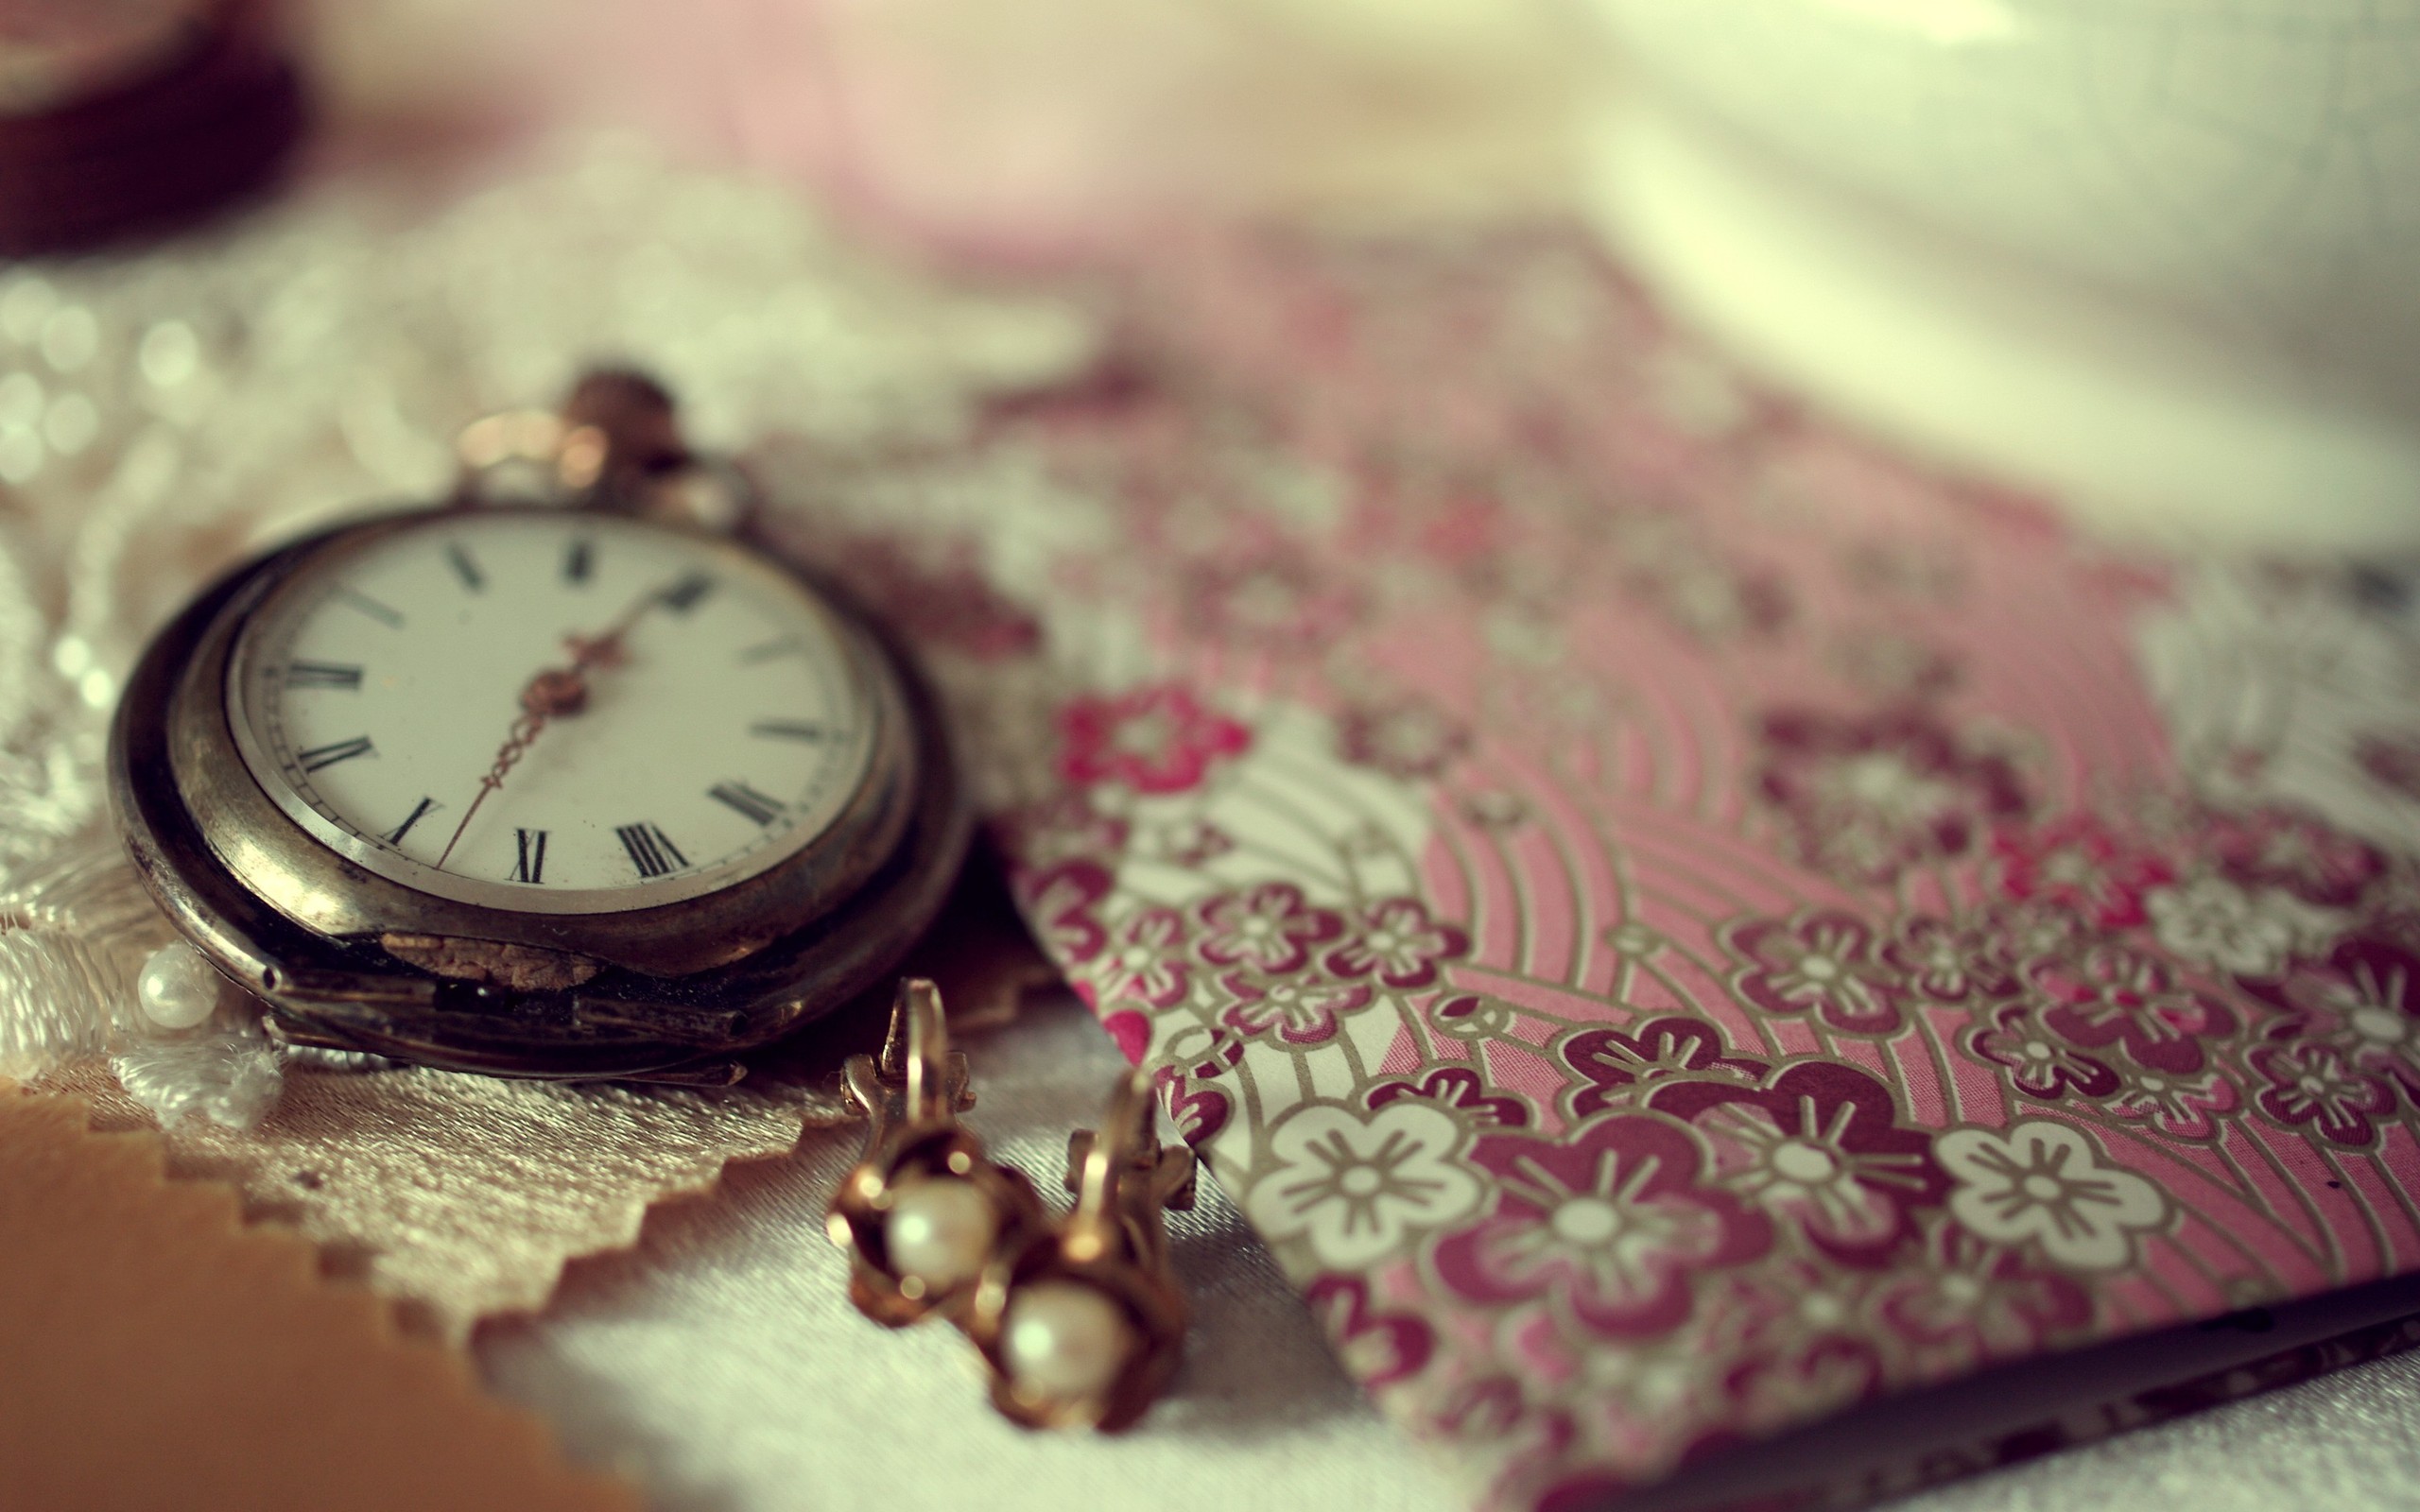 sweet wallpaper,pink,watch,still life photography,pocket watch,fashion accessory